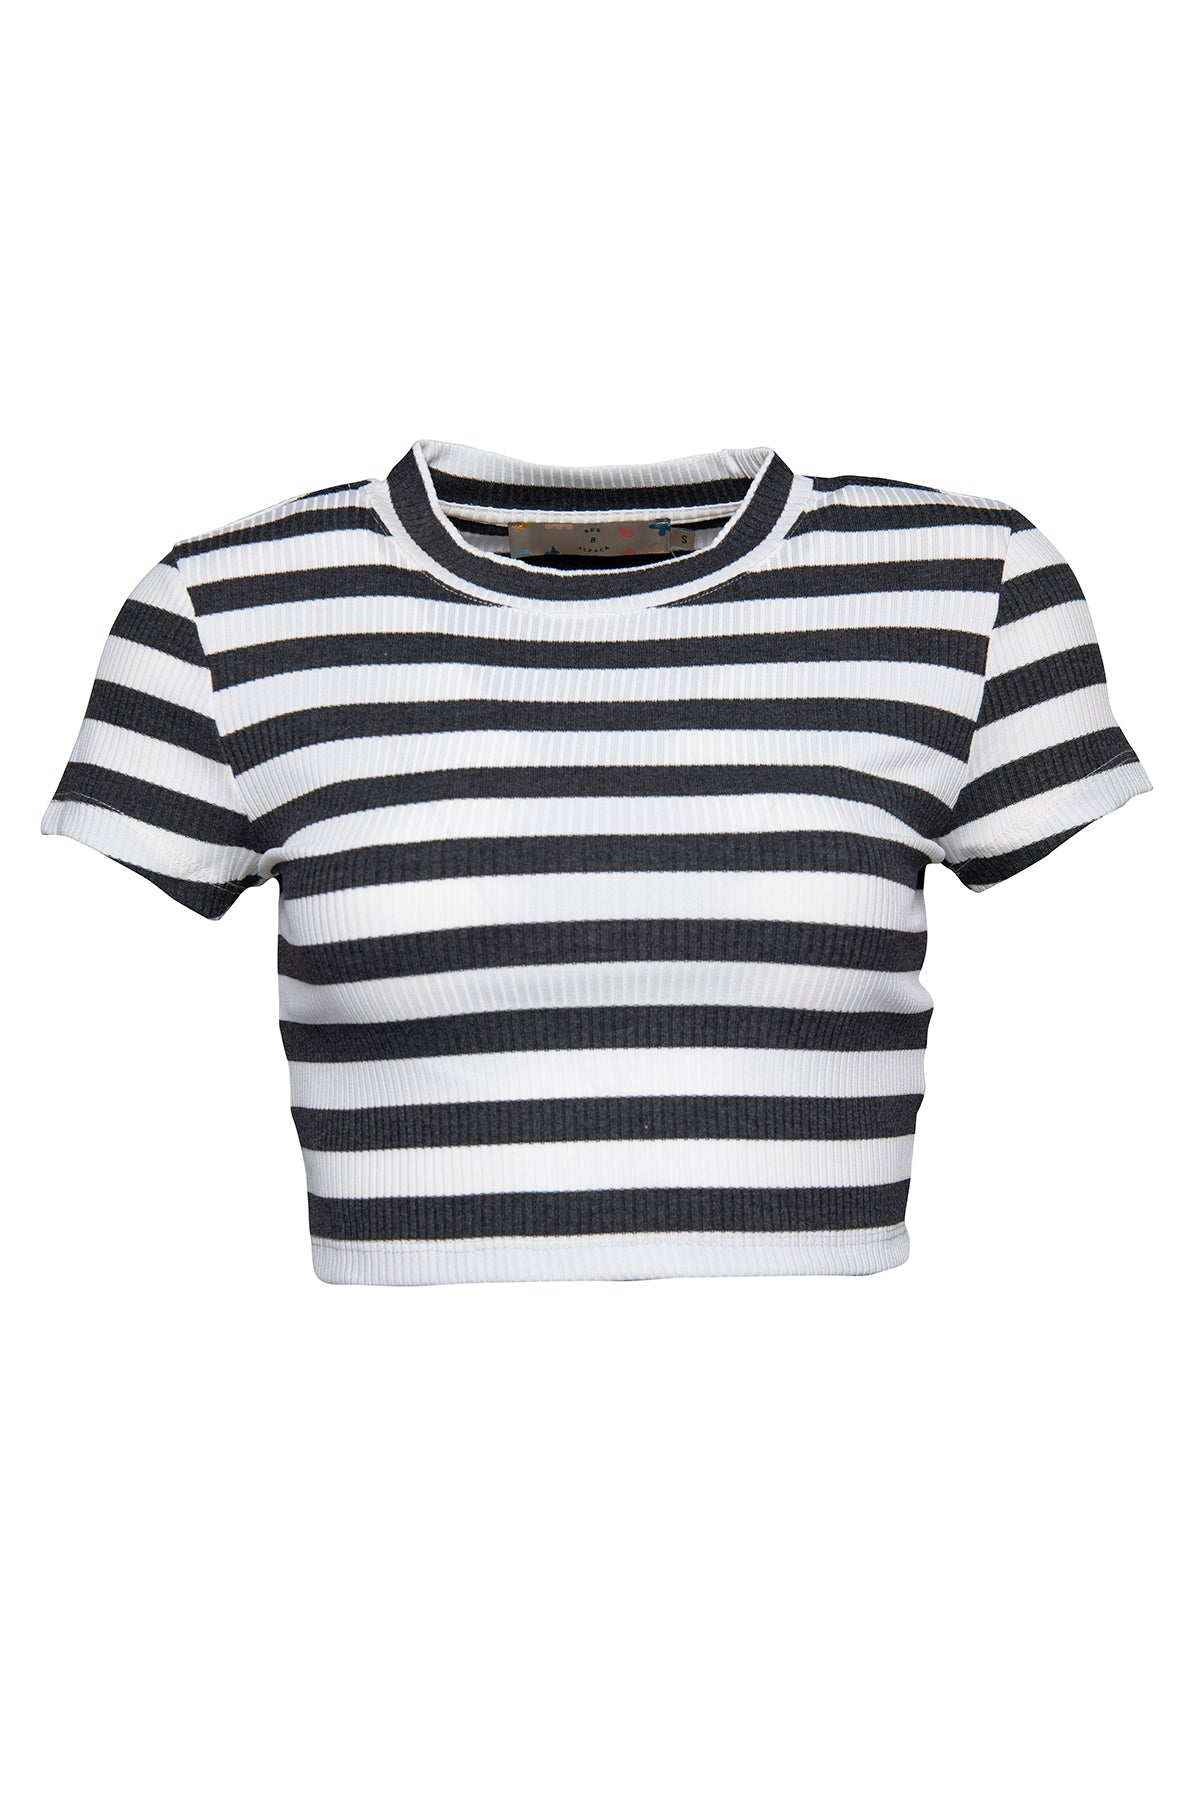 Women’s Black Striped Crop T-Shirt - Charcoal Medium Bee & Alpaca